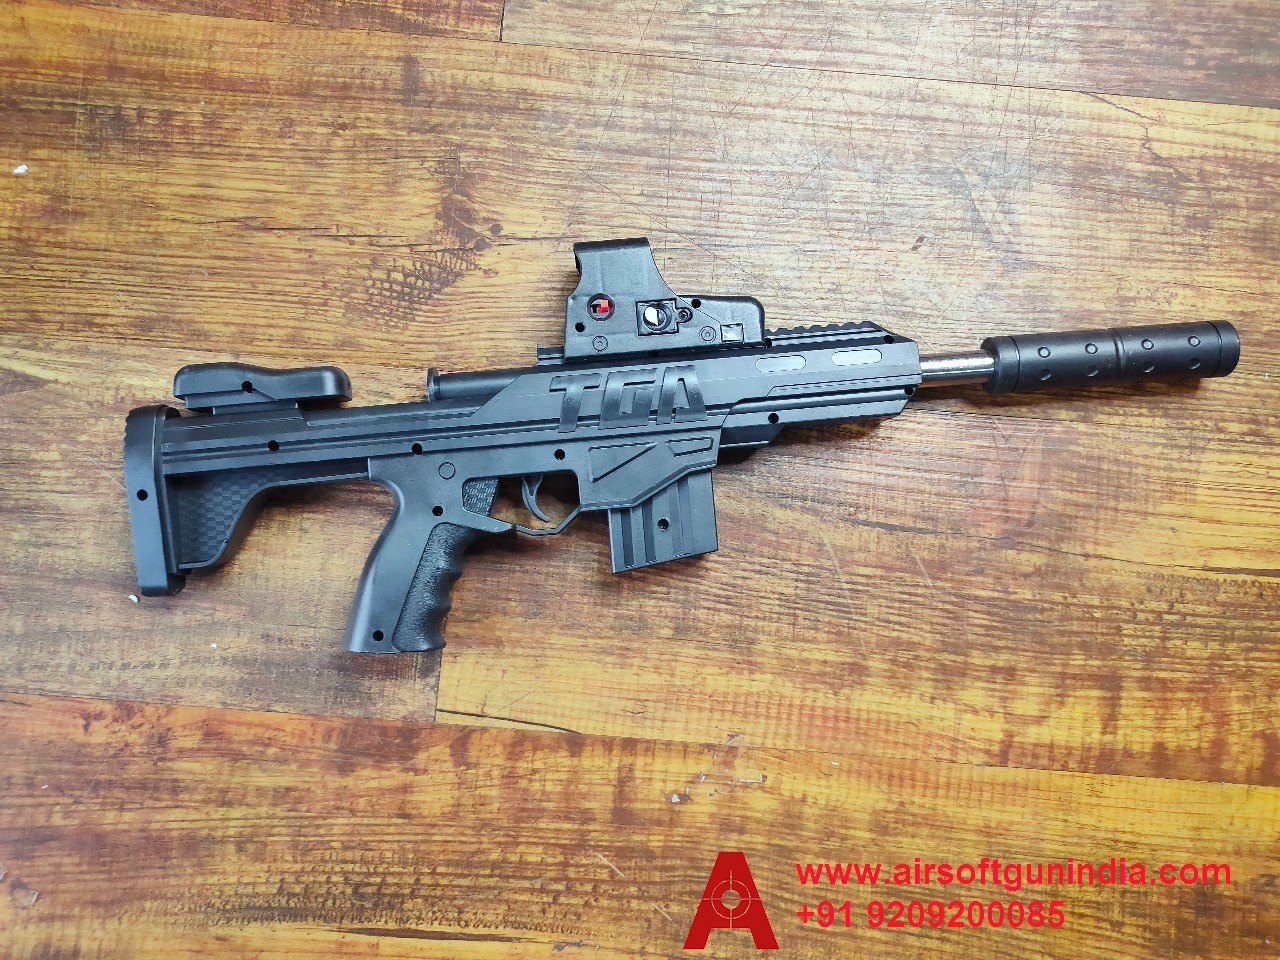 AR Pistol Y916 Mini Kids Toy By Airsoft Gun India